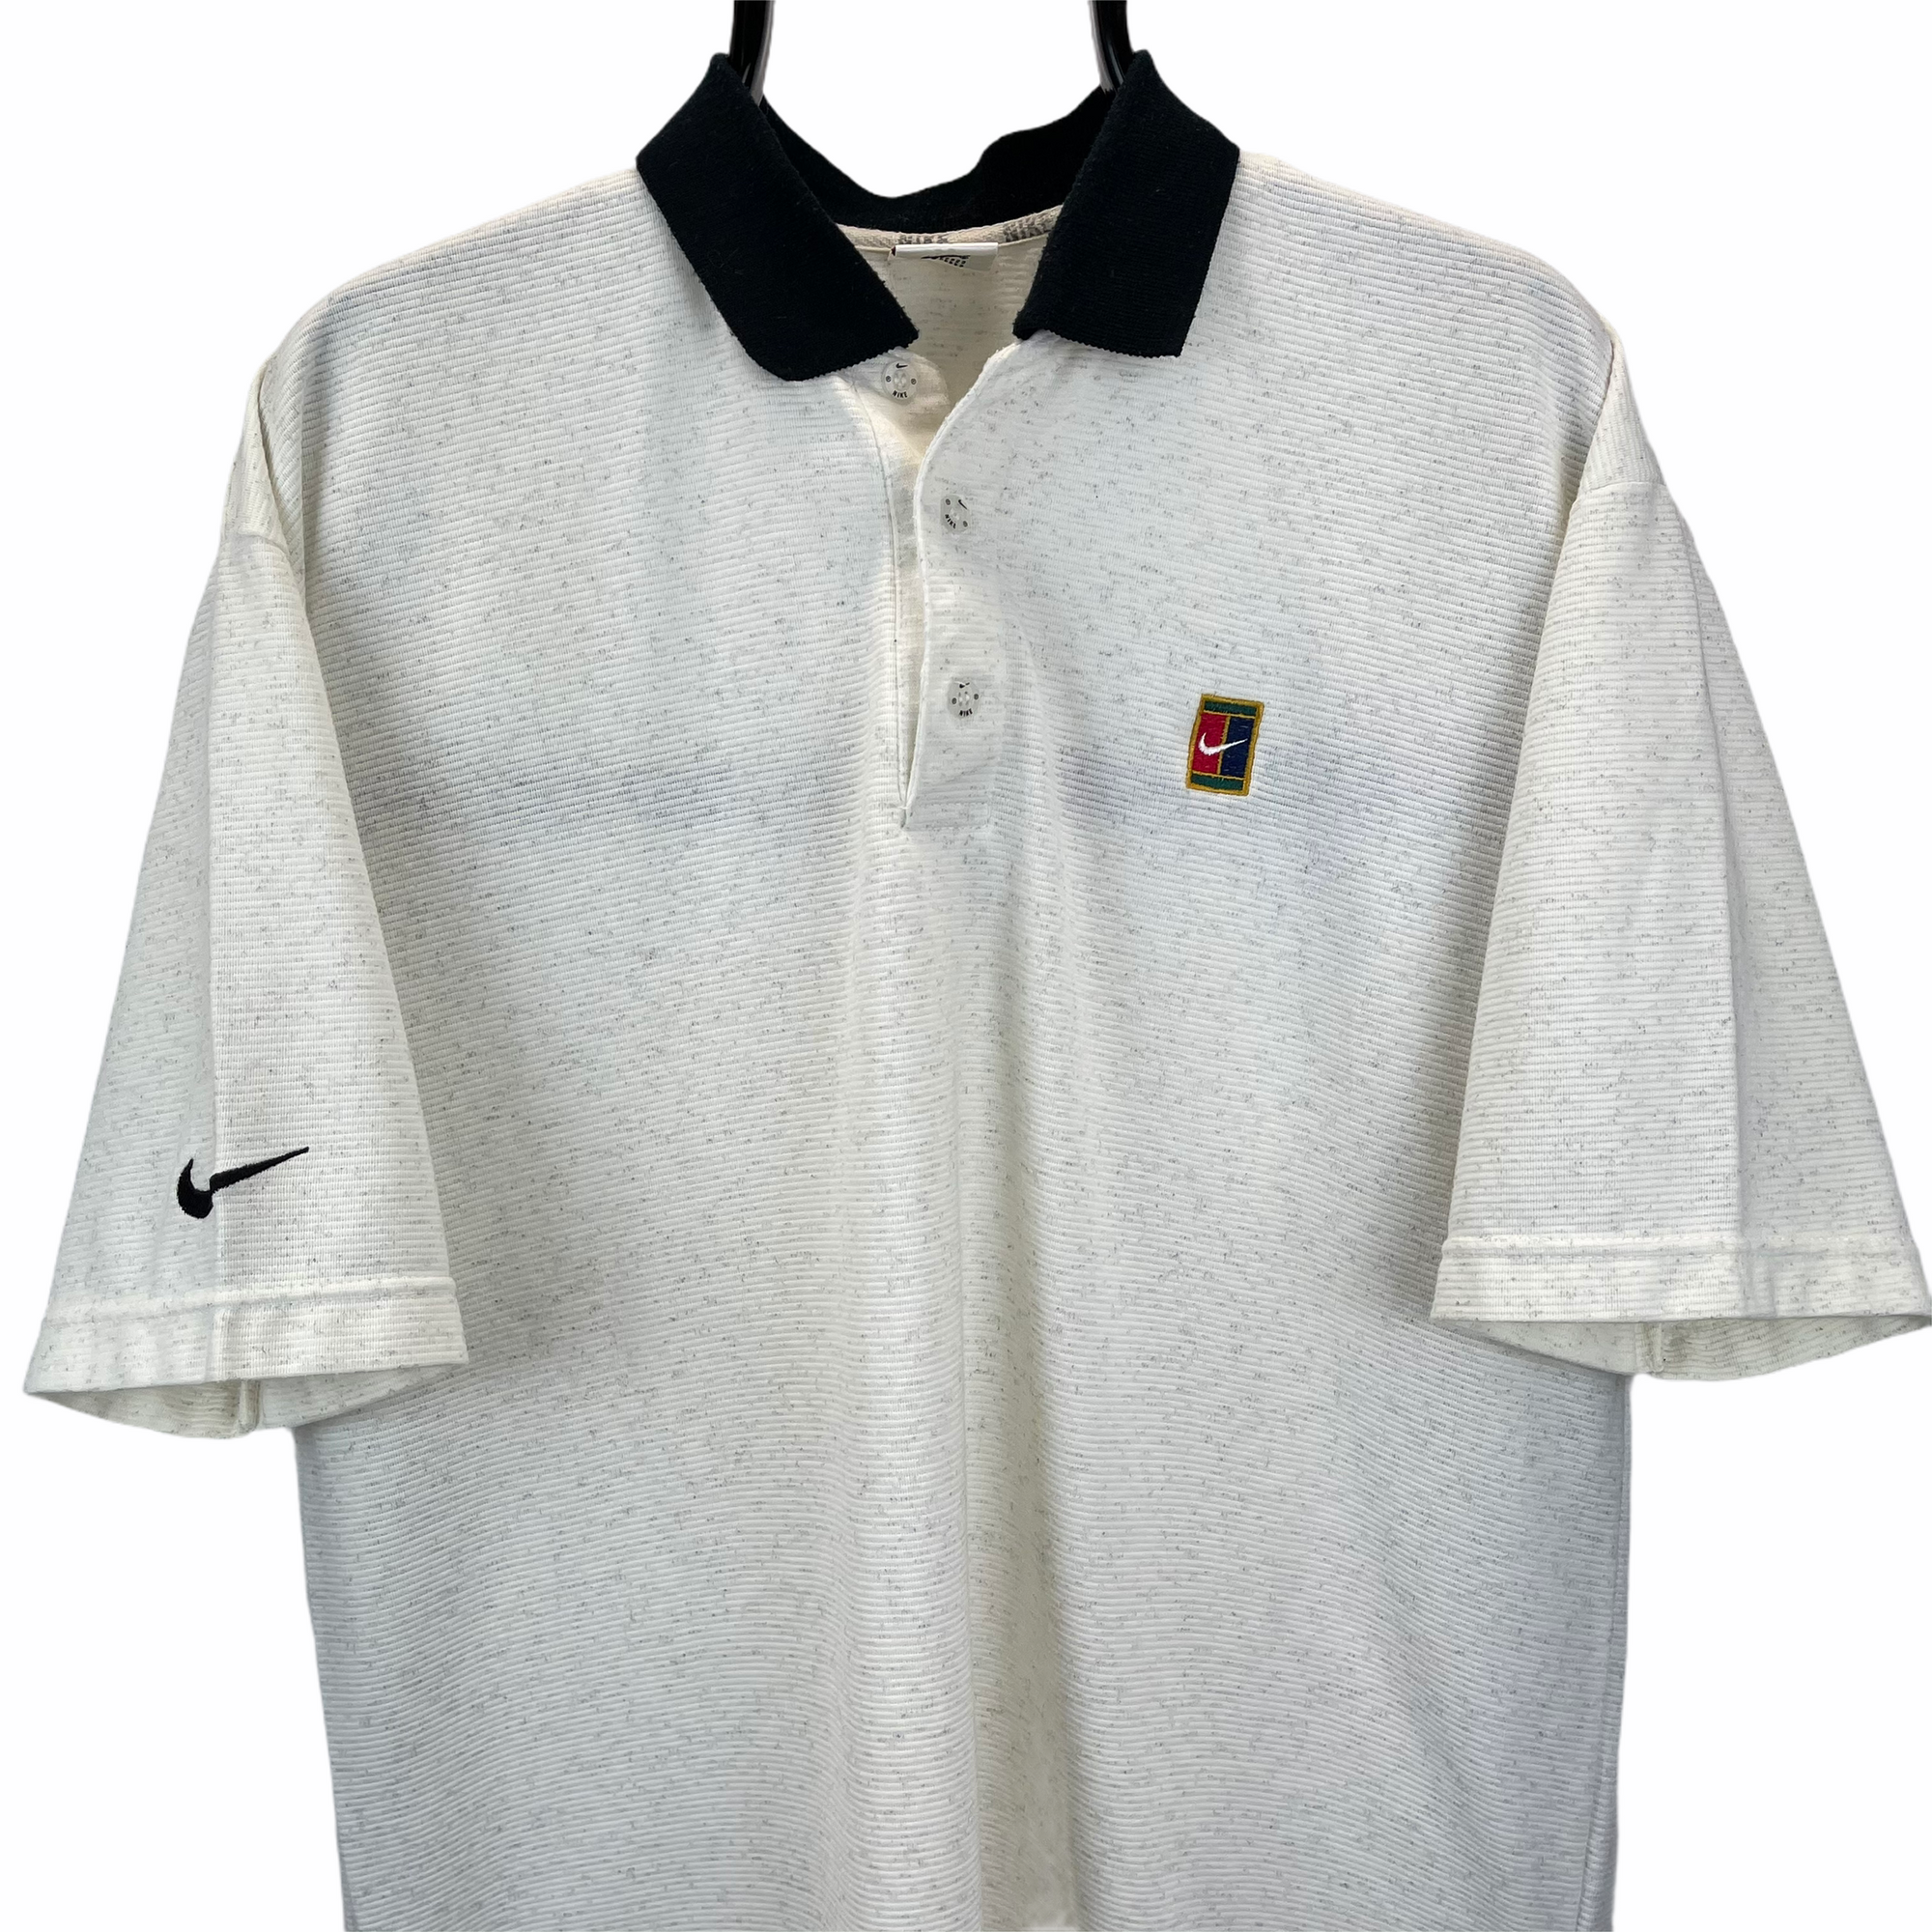 Vintage 90s Nike Polo Shirt in Cream - Men's XL/Women's XXL